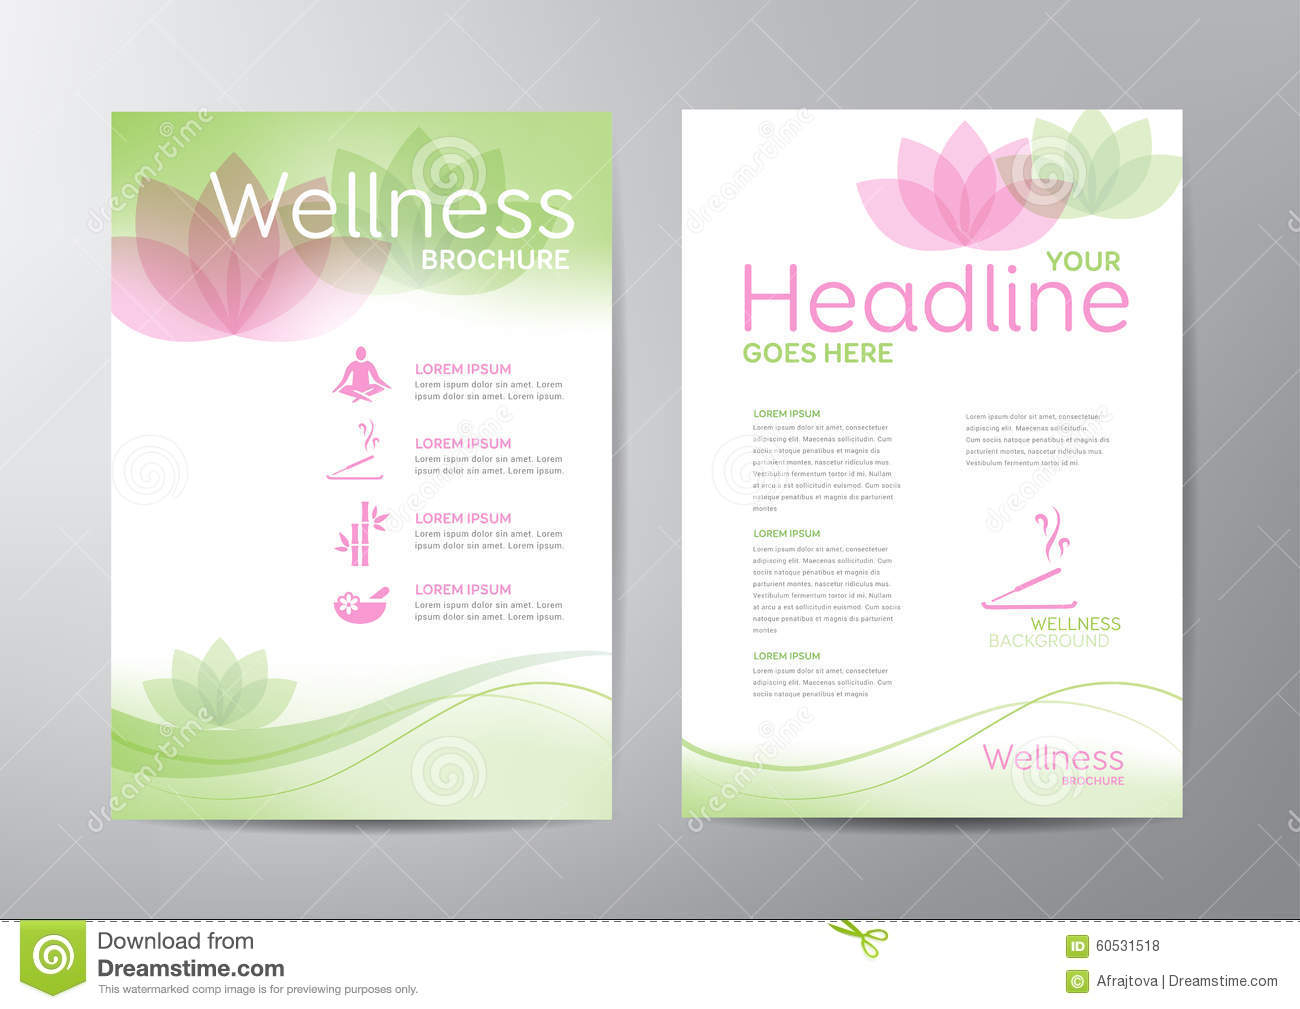 Wellness Brochure Stock Vector. Illustration Of Lotus - 60531518 Inside Health And Wellness Flyer Template